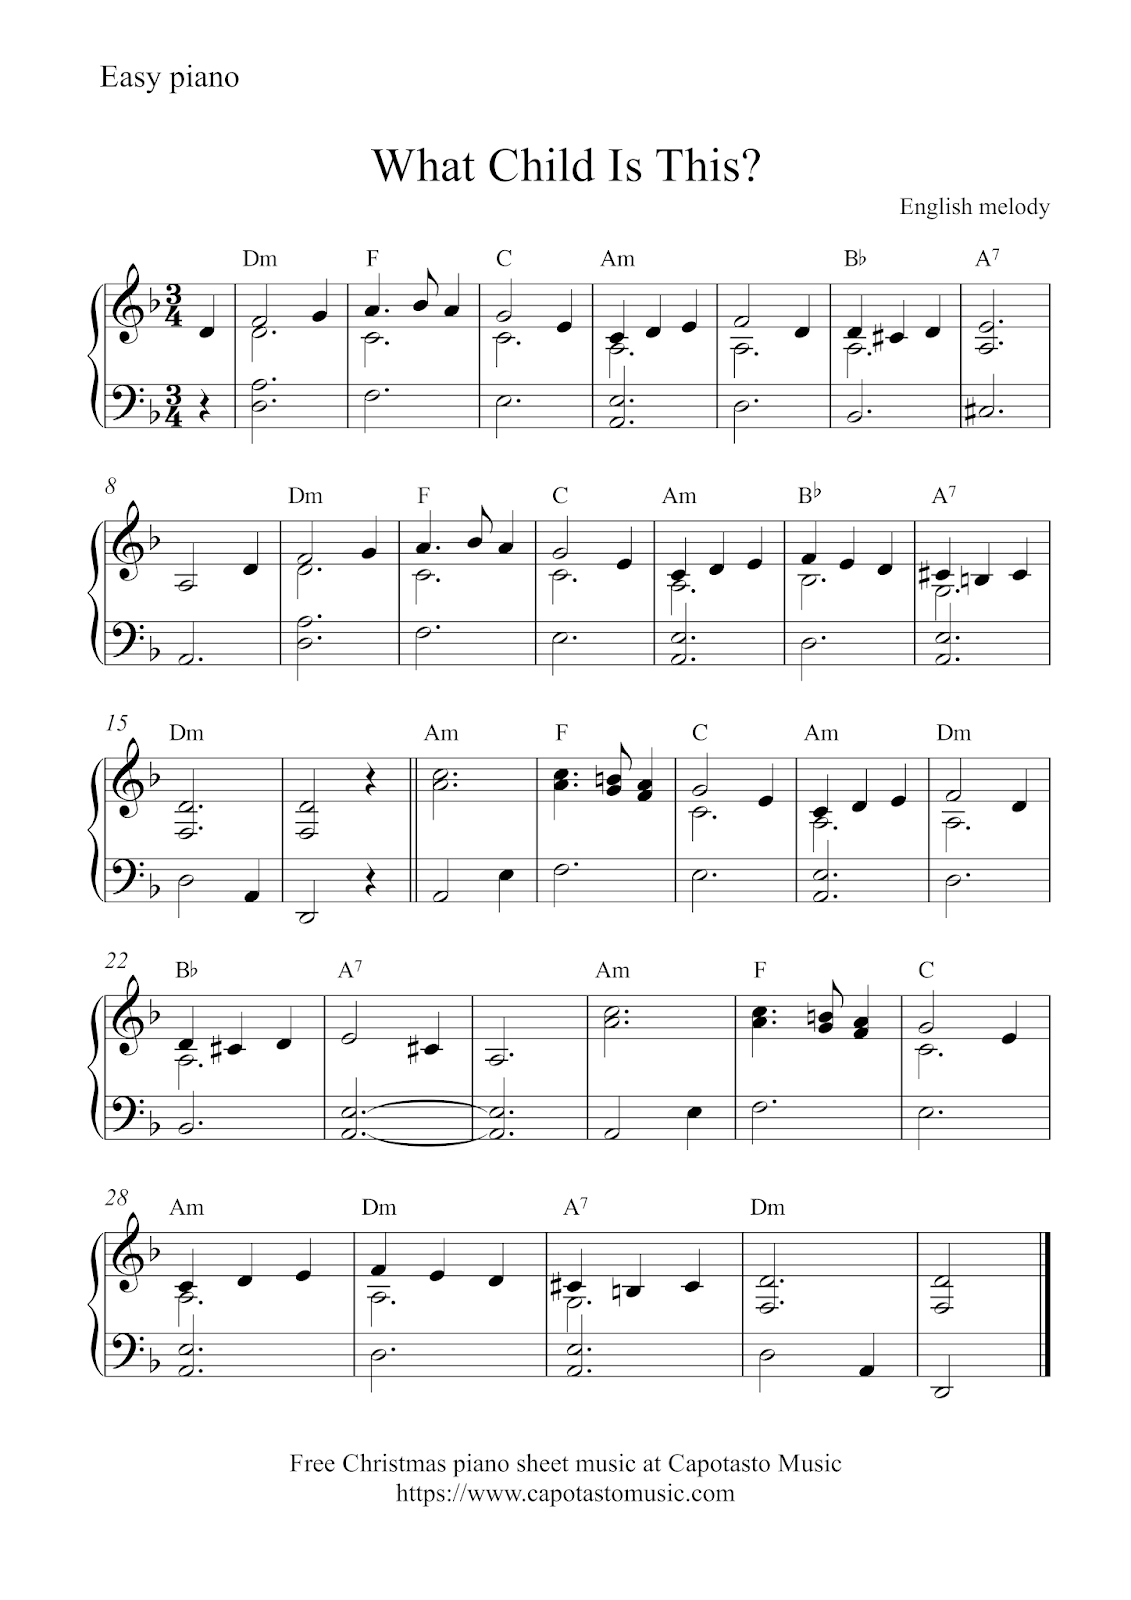 Free Easy Christmas Piano Sheet Music | What Child Is This? - Christmas Songs Piano Sheet Music Free Printable